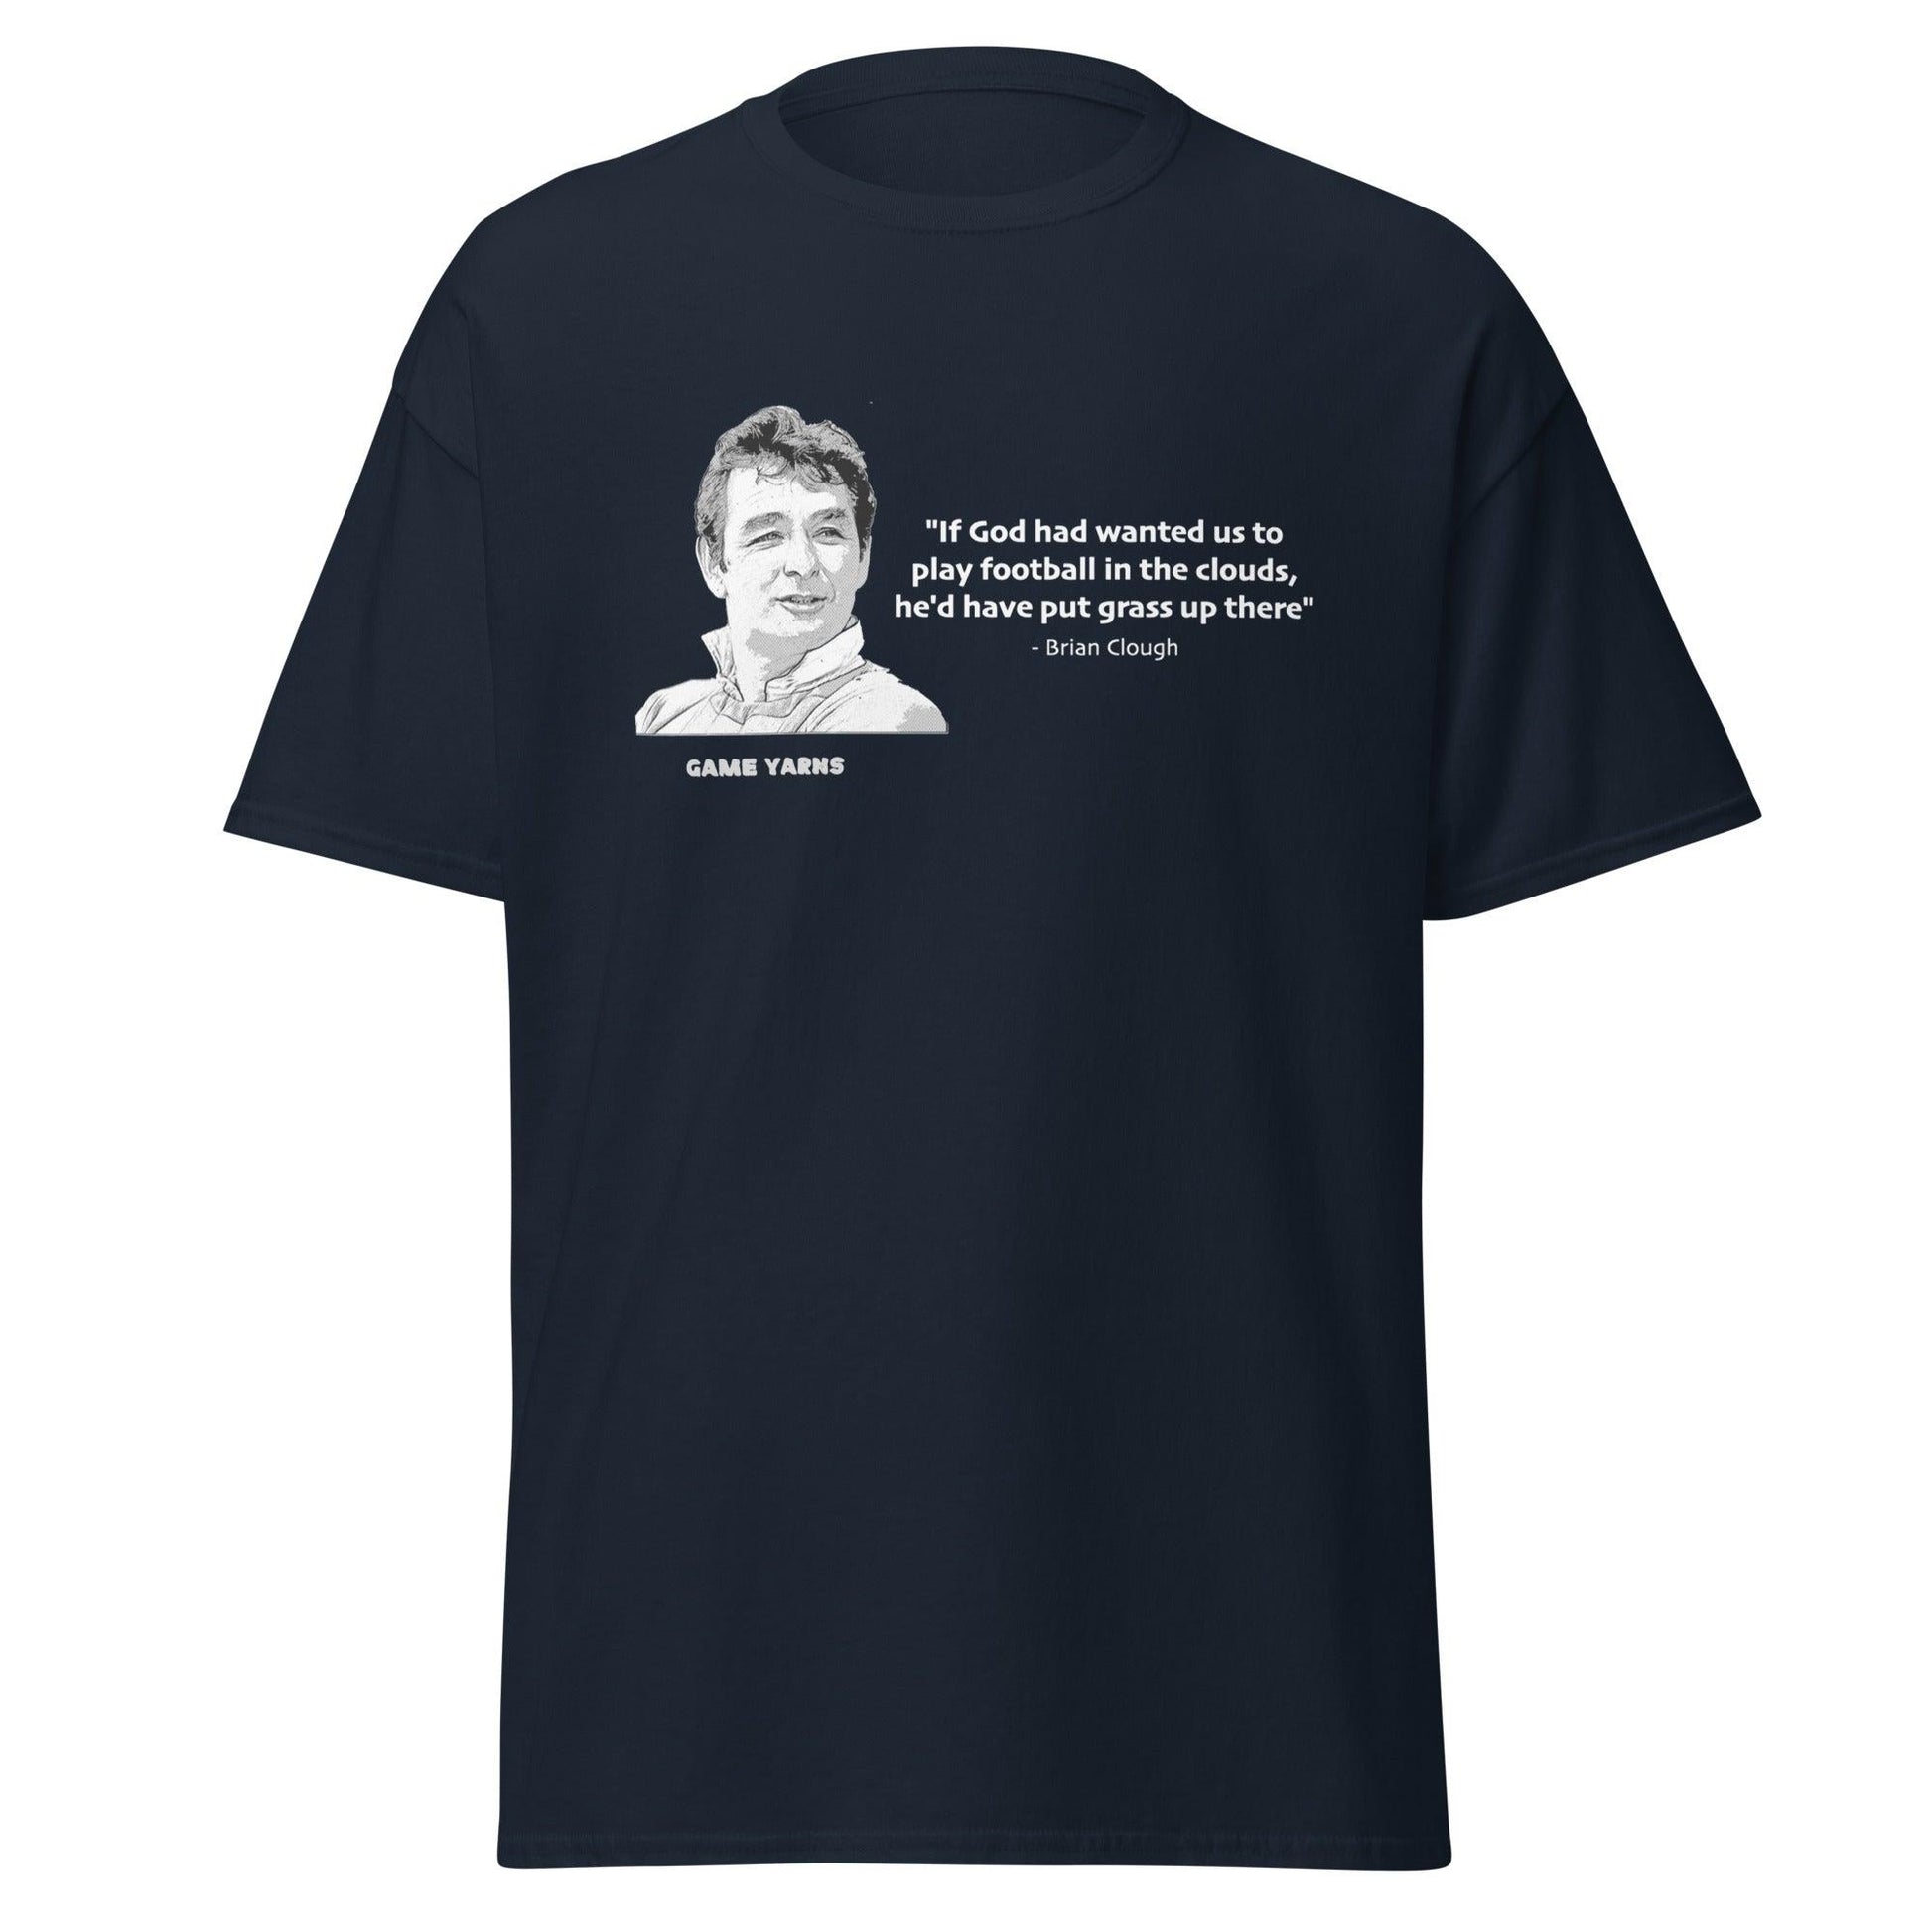 Brian Clough Football Clouds T-Shirt by Game Yarns